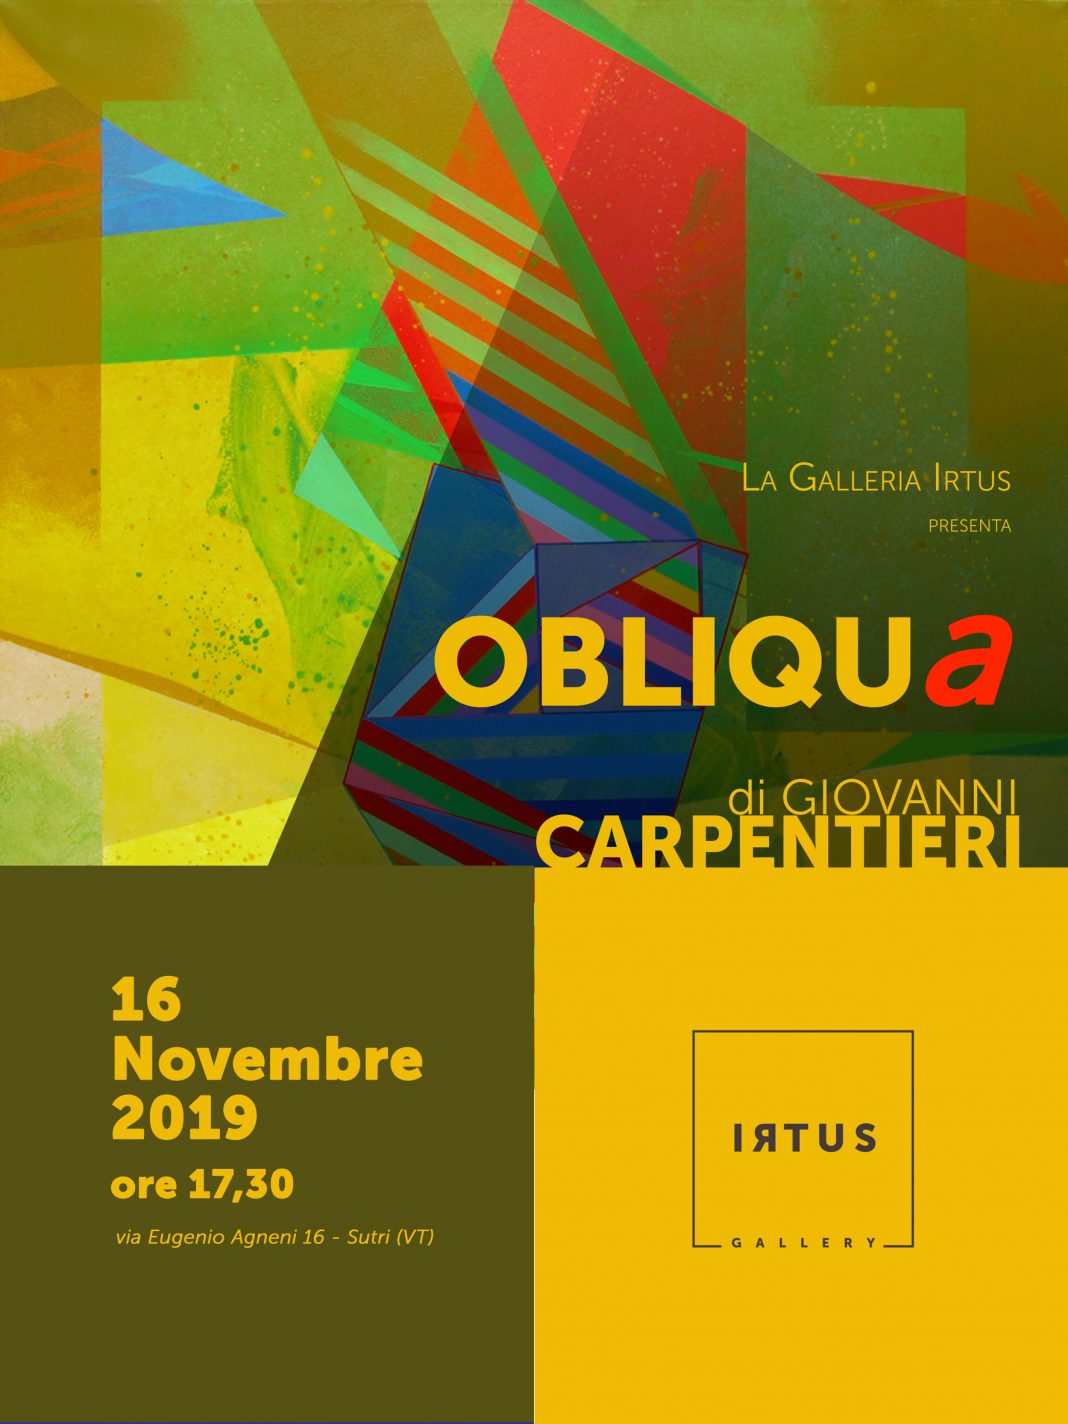 Giovanni Carpentieri – Obliquahttps://www.exibart.com/repository/media/formidable/11/OBLIQUa-locandina-web-1068x1424.jpg